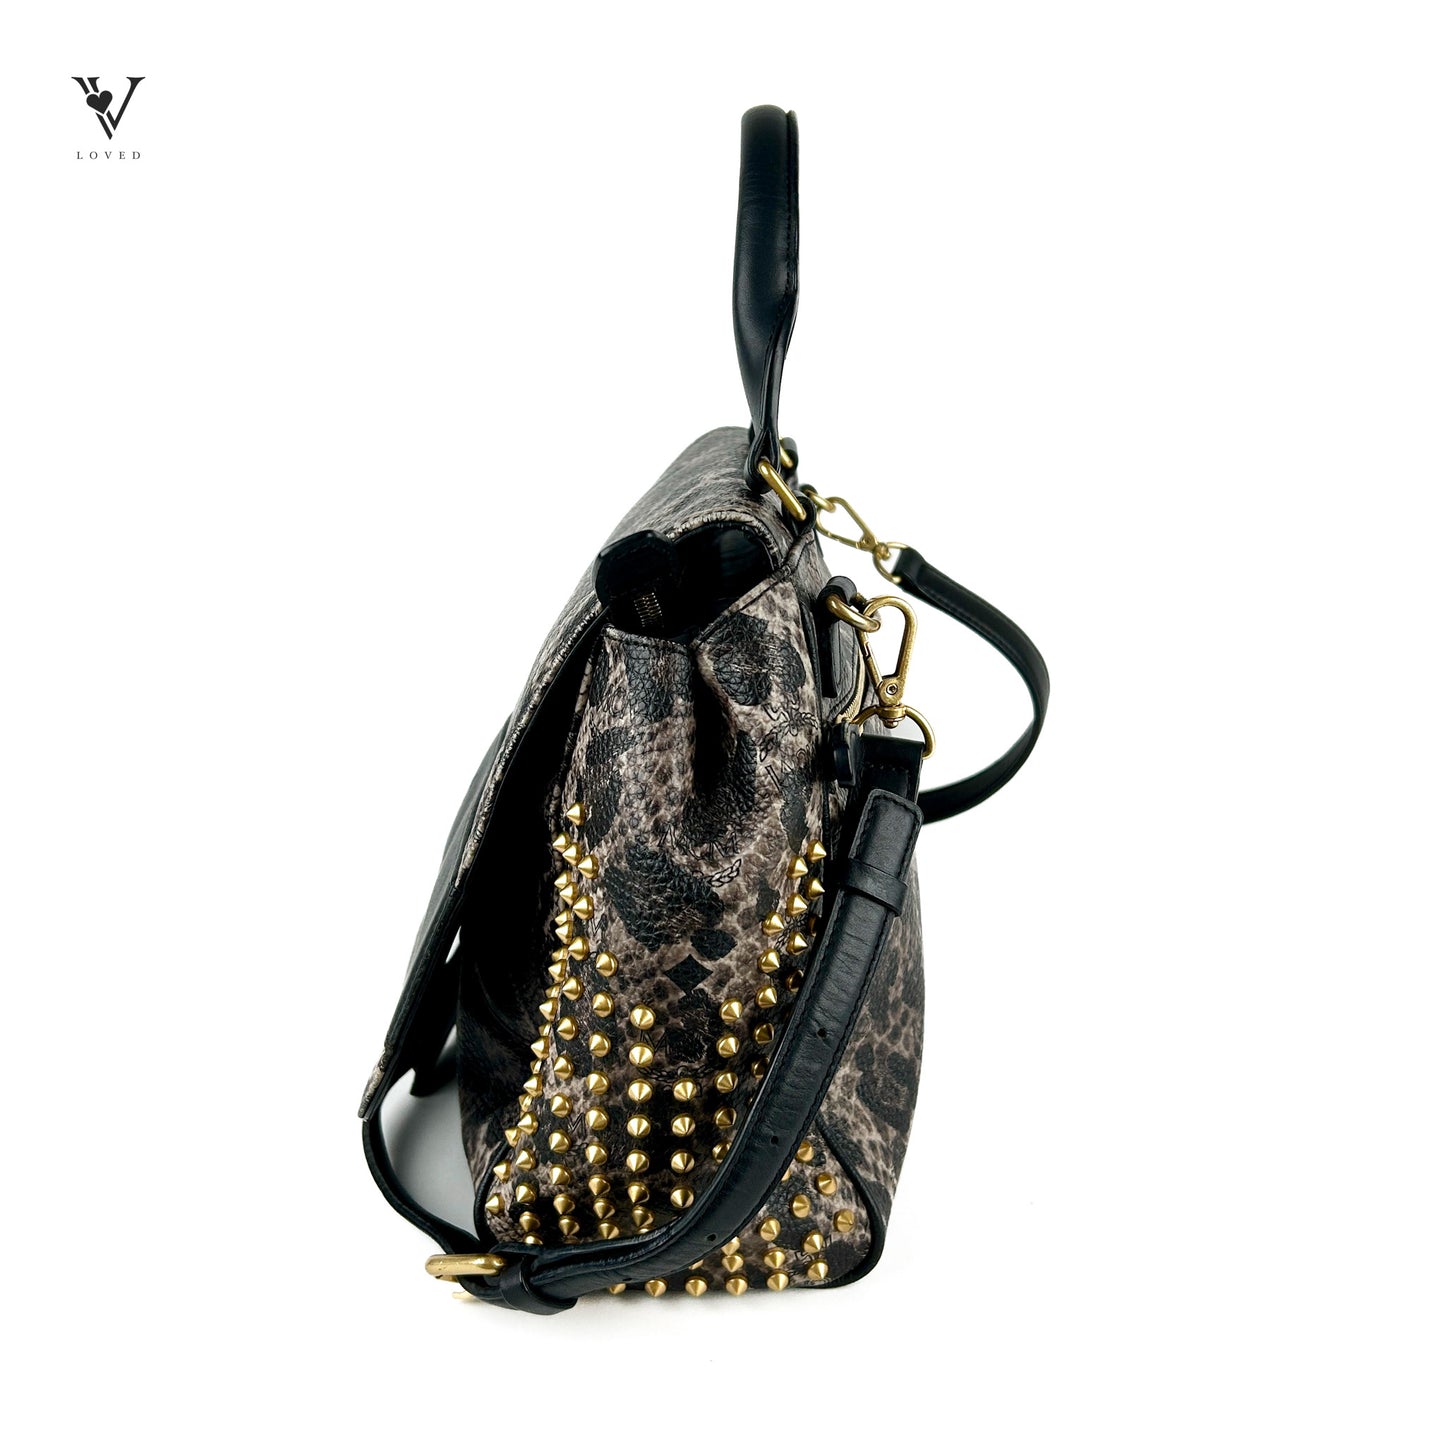 Studded Two-Way Messenger bag in Leather Snake Skin Motif